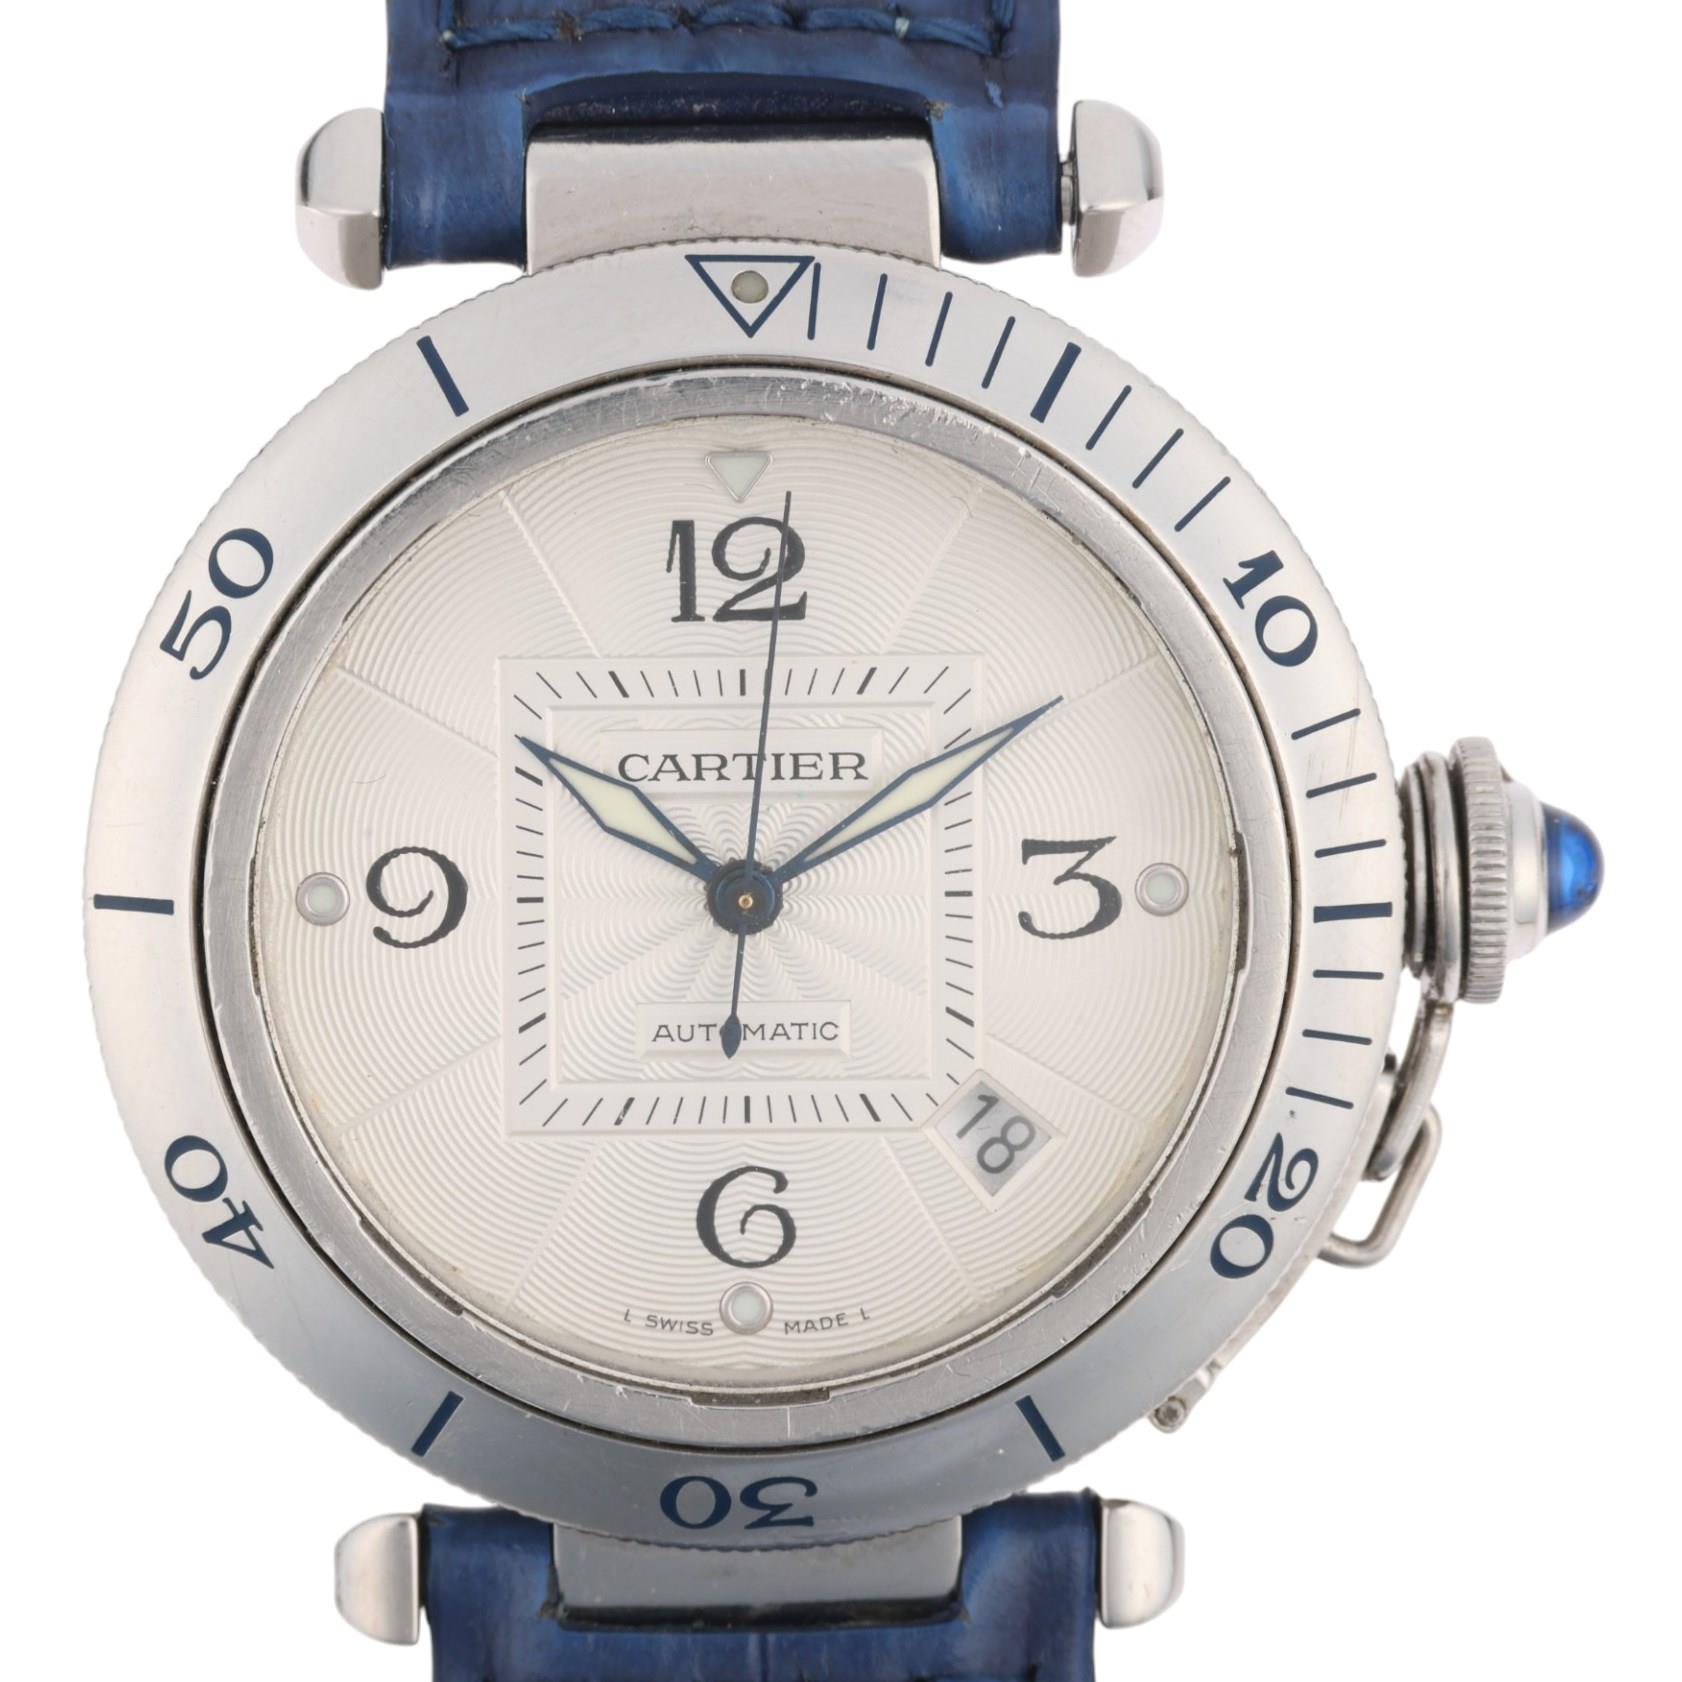 CARTIER - a stainless steel Pasha De Cartier automatic calendar wristwatch, ref. 2379, engine turned